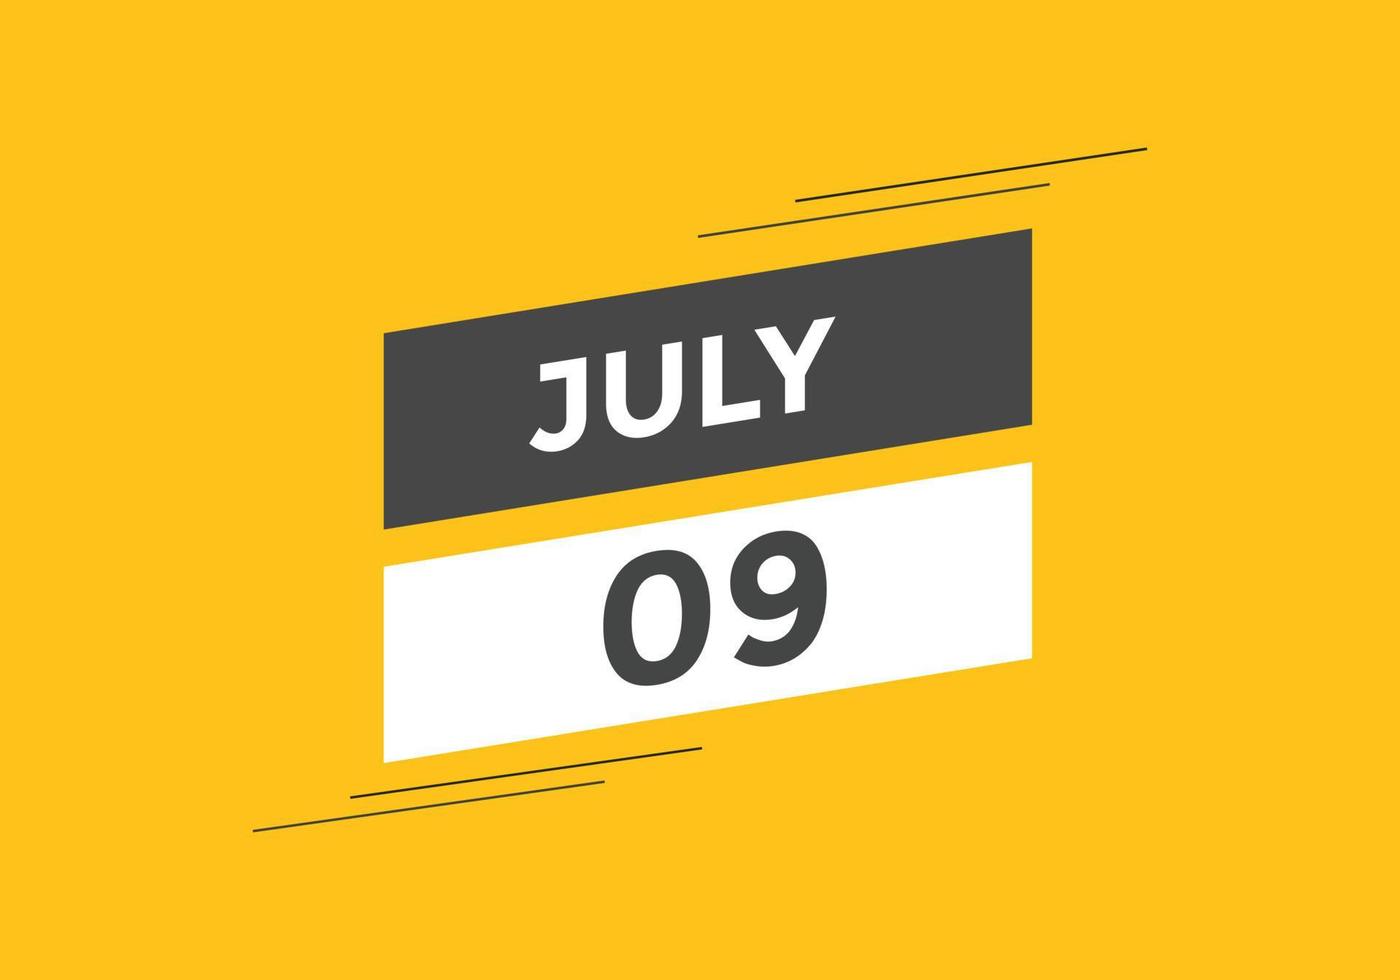 9. Juli Kalendererinnerung. 9. juli tägliche kalendersymbolvorlage. Kalender 9. Juli Icon-Design-Vorlage. Vektor-Illustration vektor